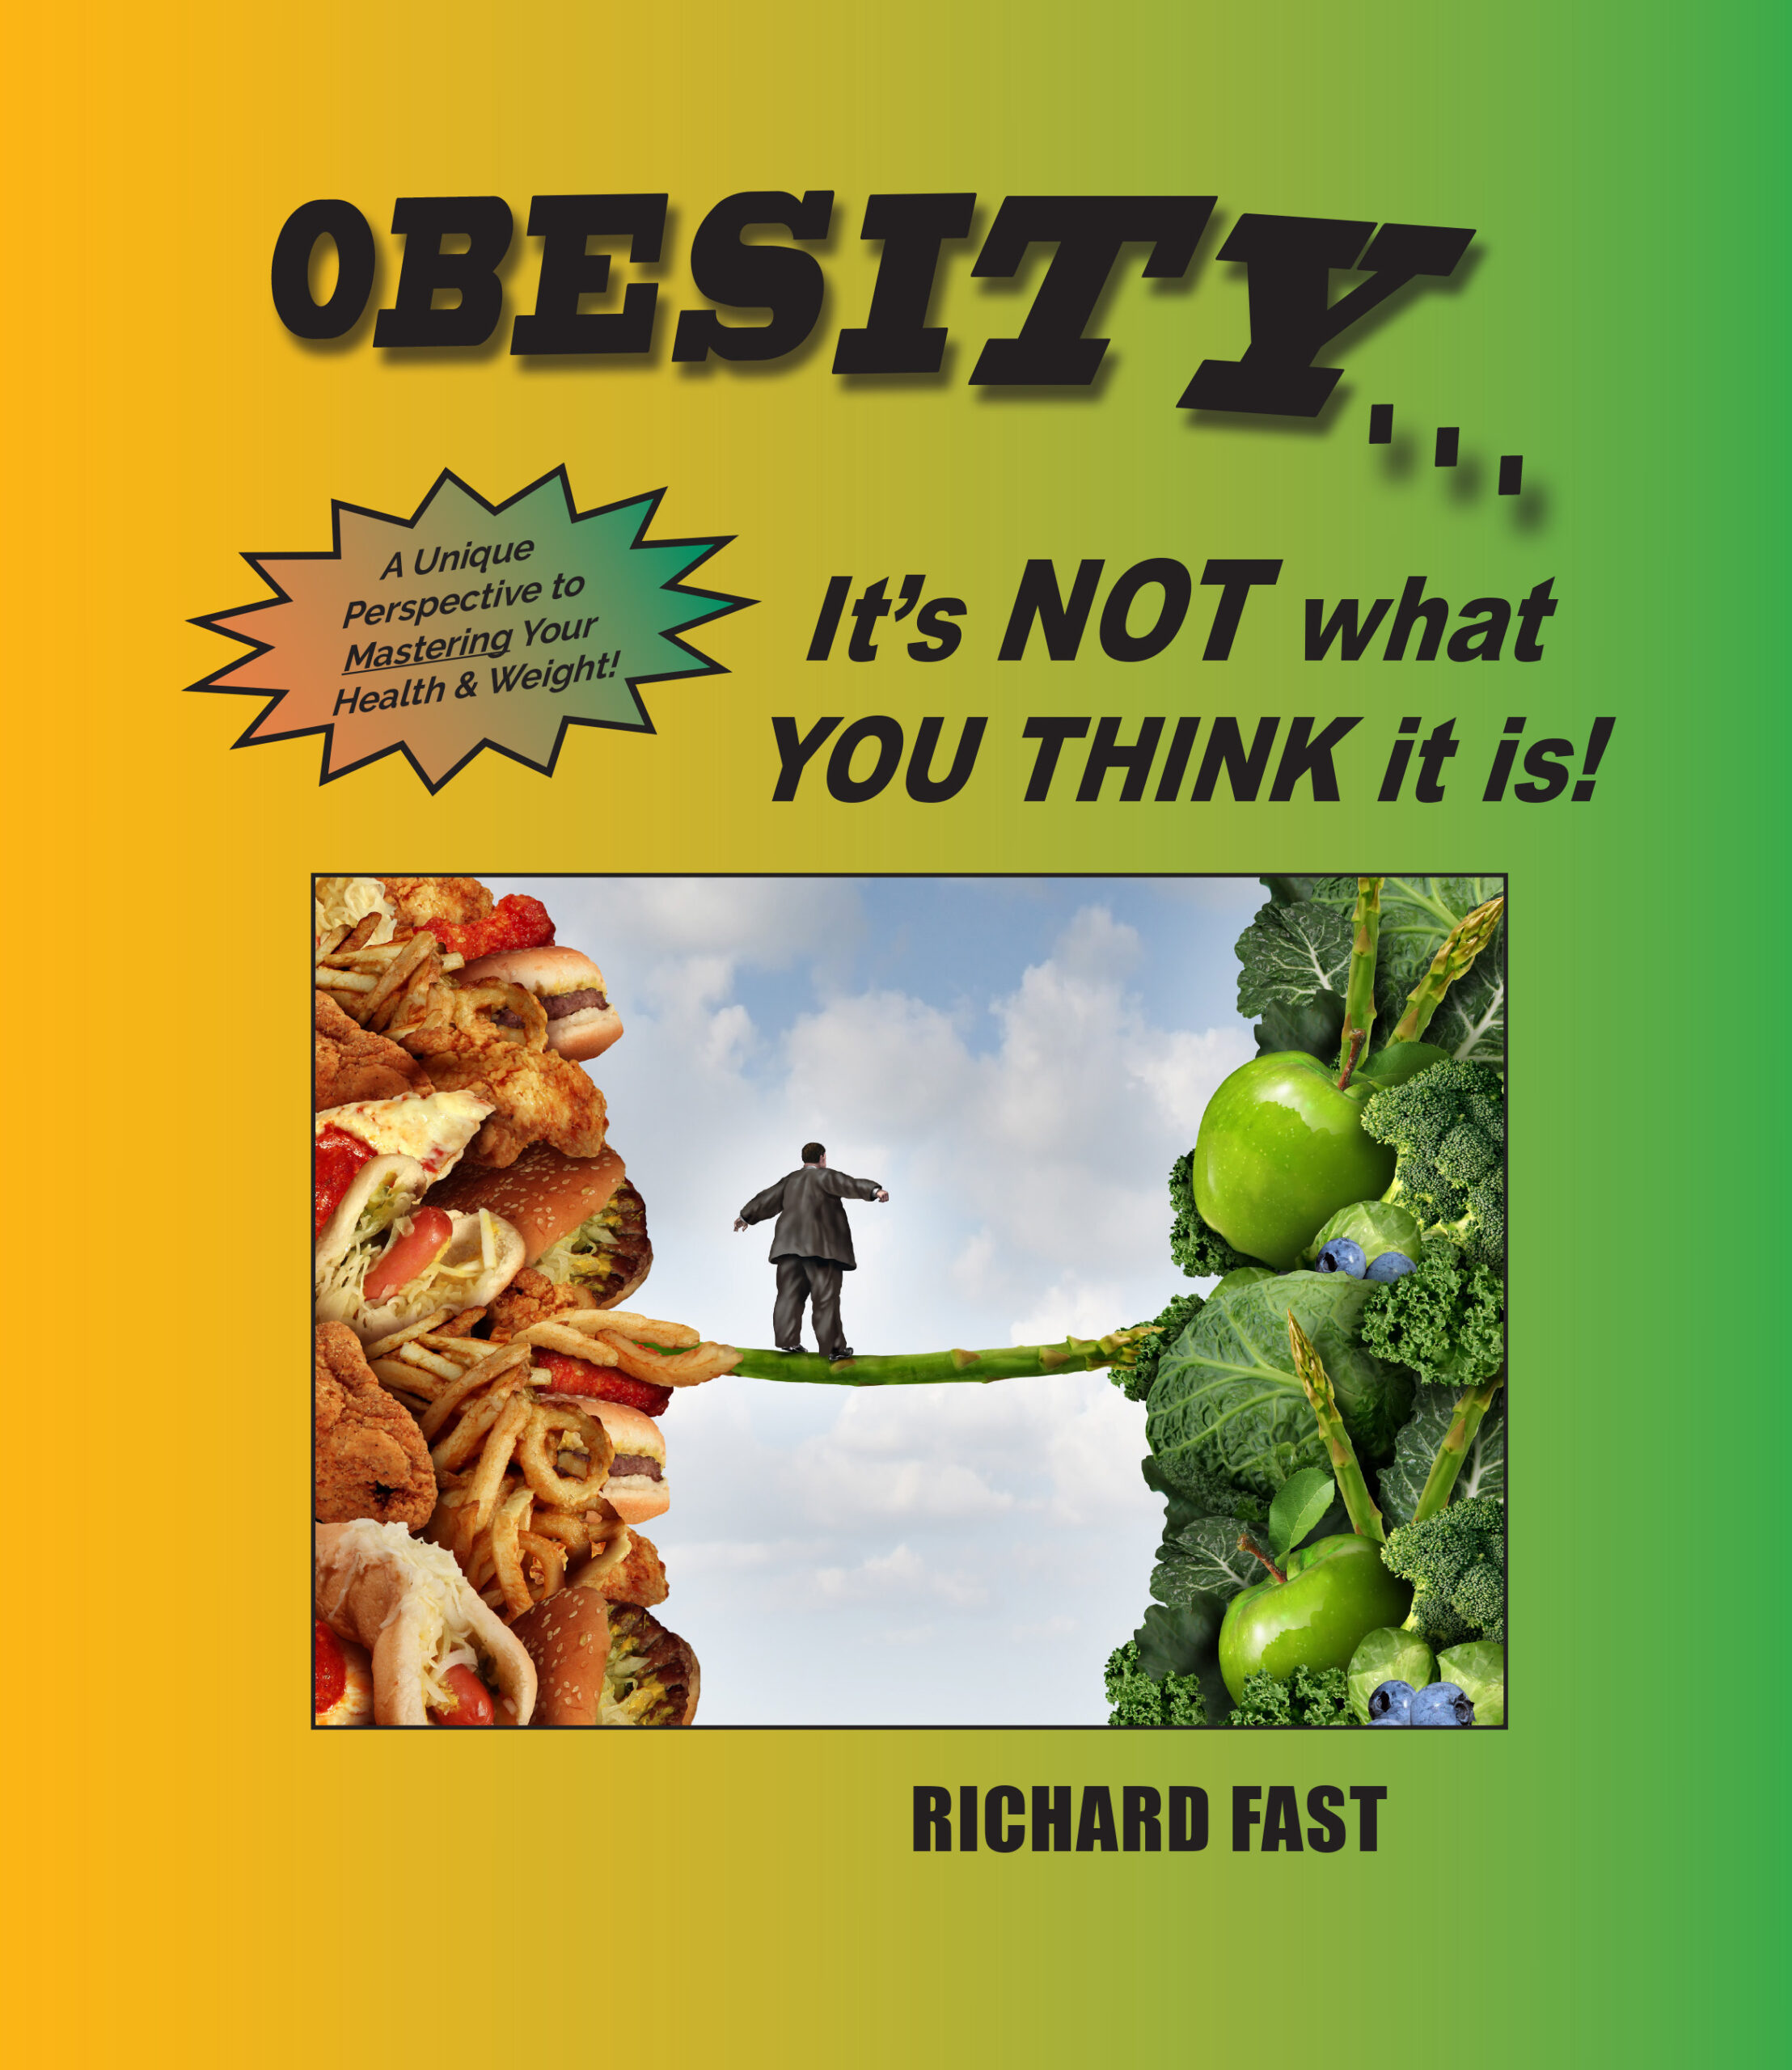 Obesity by Richard Fast